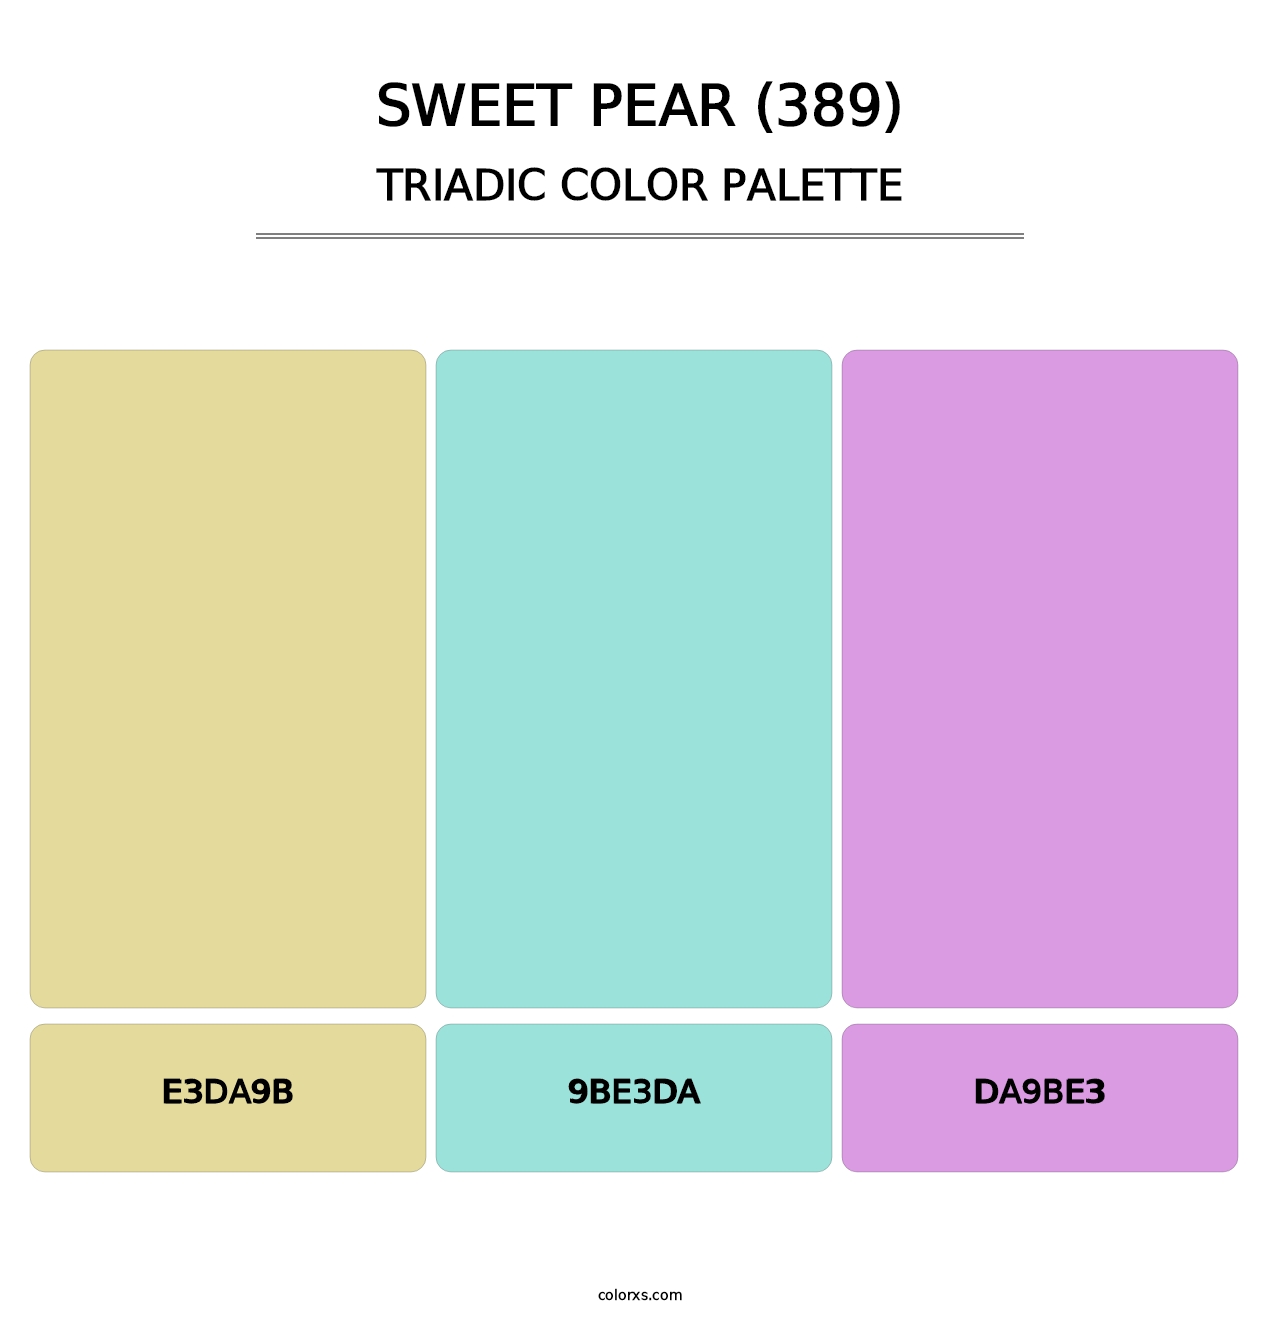 Sweet Pear (389) - Triadic Color Palette